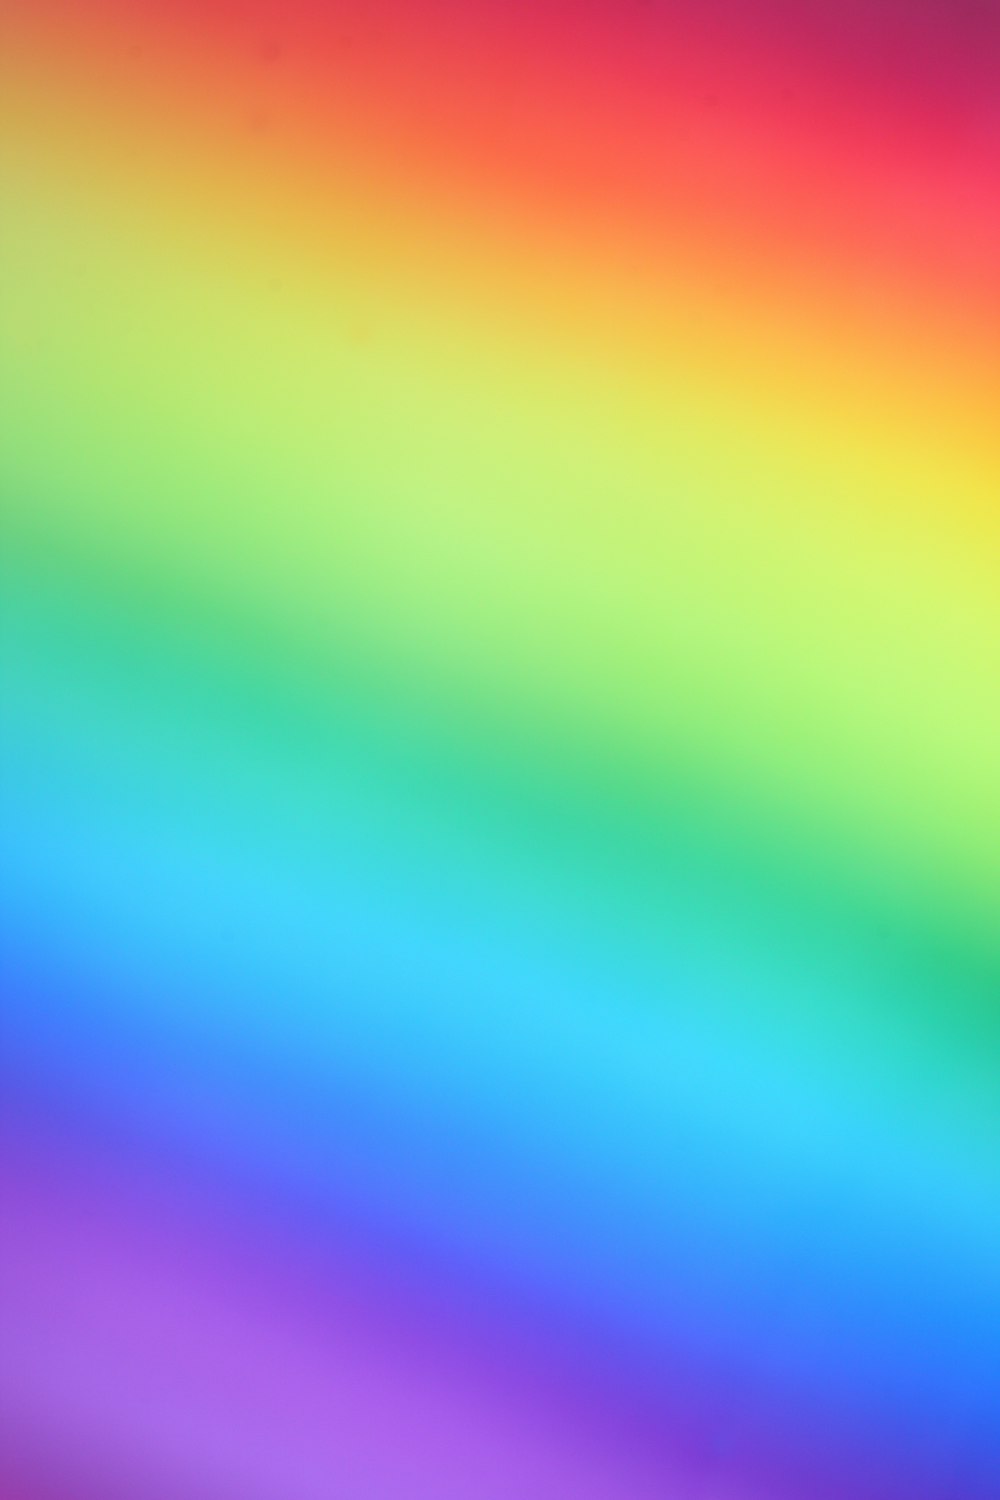 Color Spectrum Pictures | Download Free Images on Unsplash